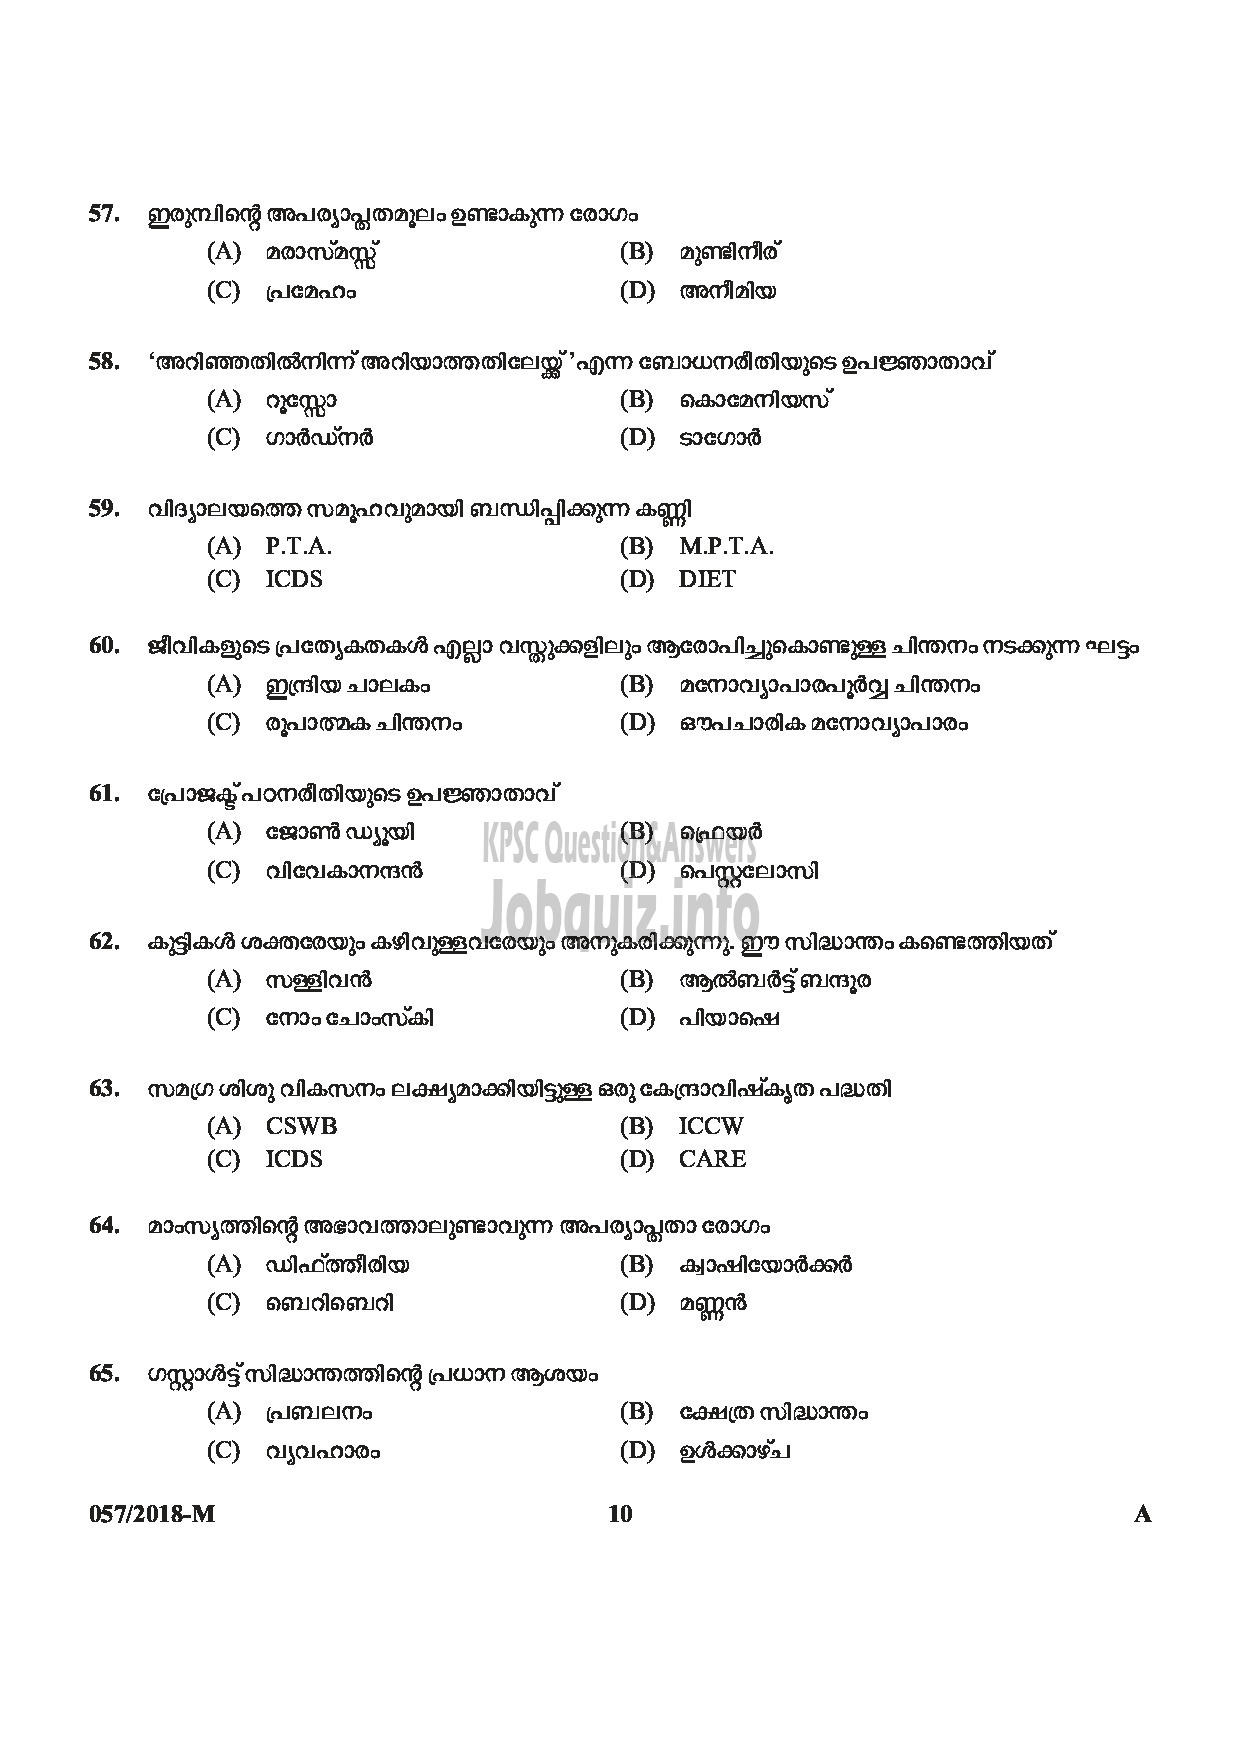 Kerala PSC Question Paper - NURSERY TEACHER SOCIAL JUSTICE DEPARTMENT MALAYALAM-10